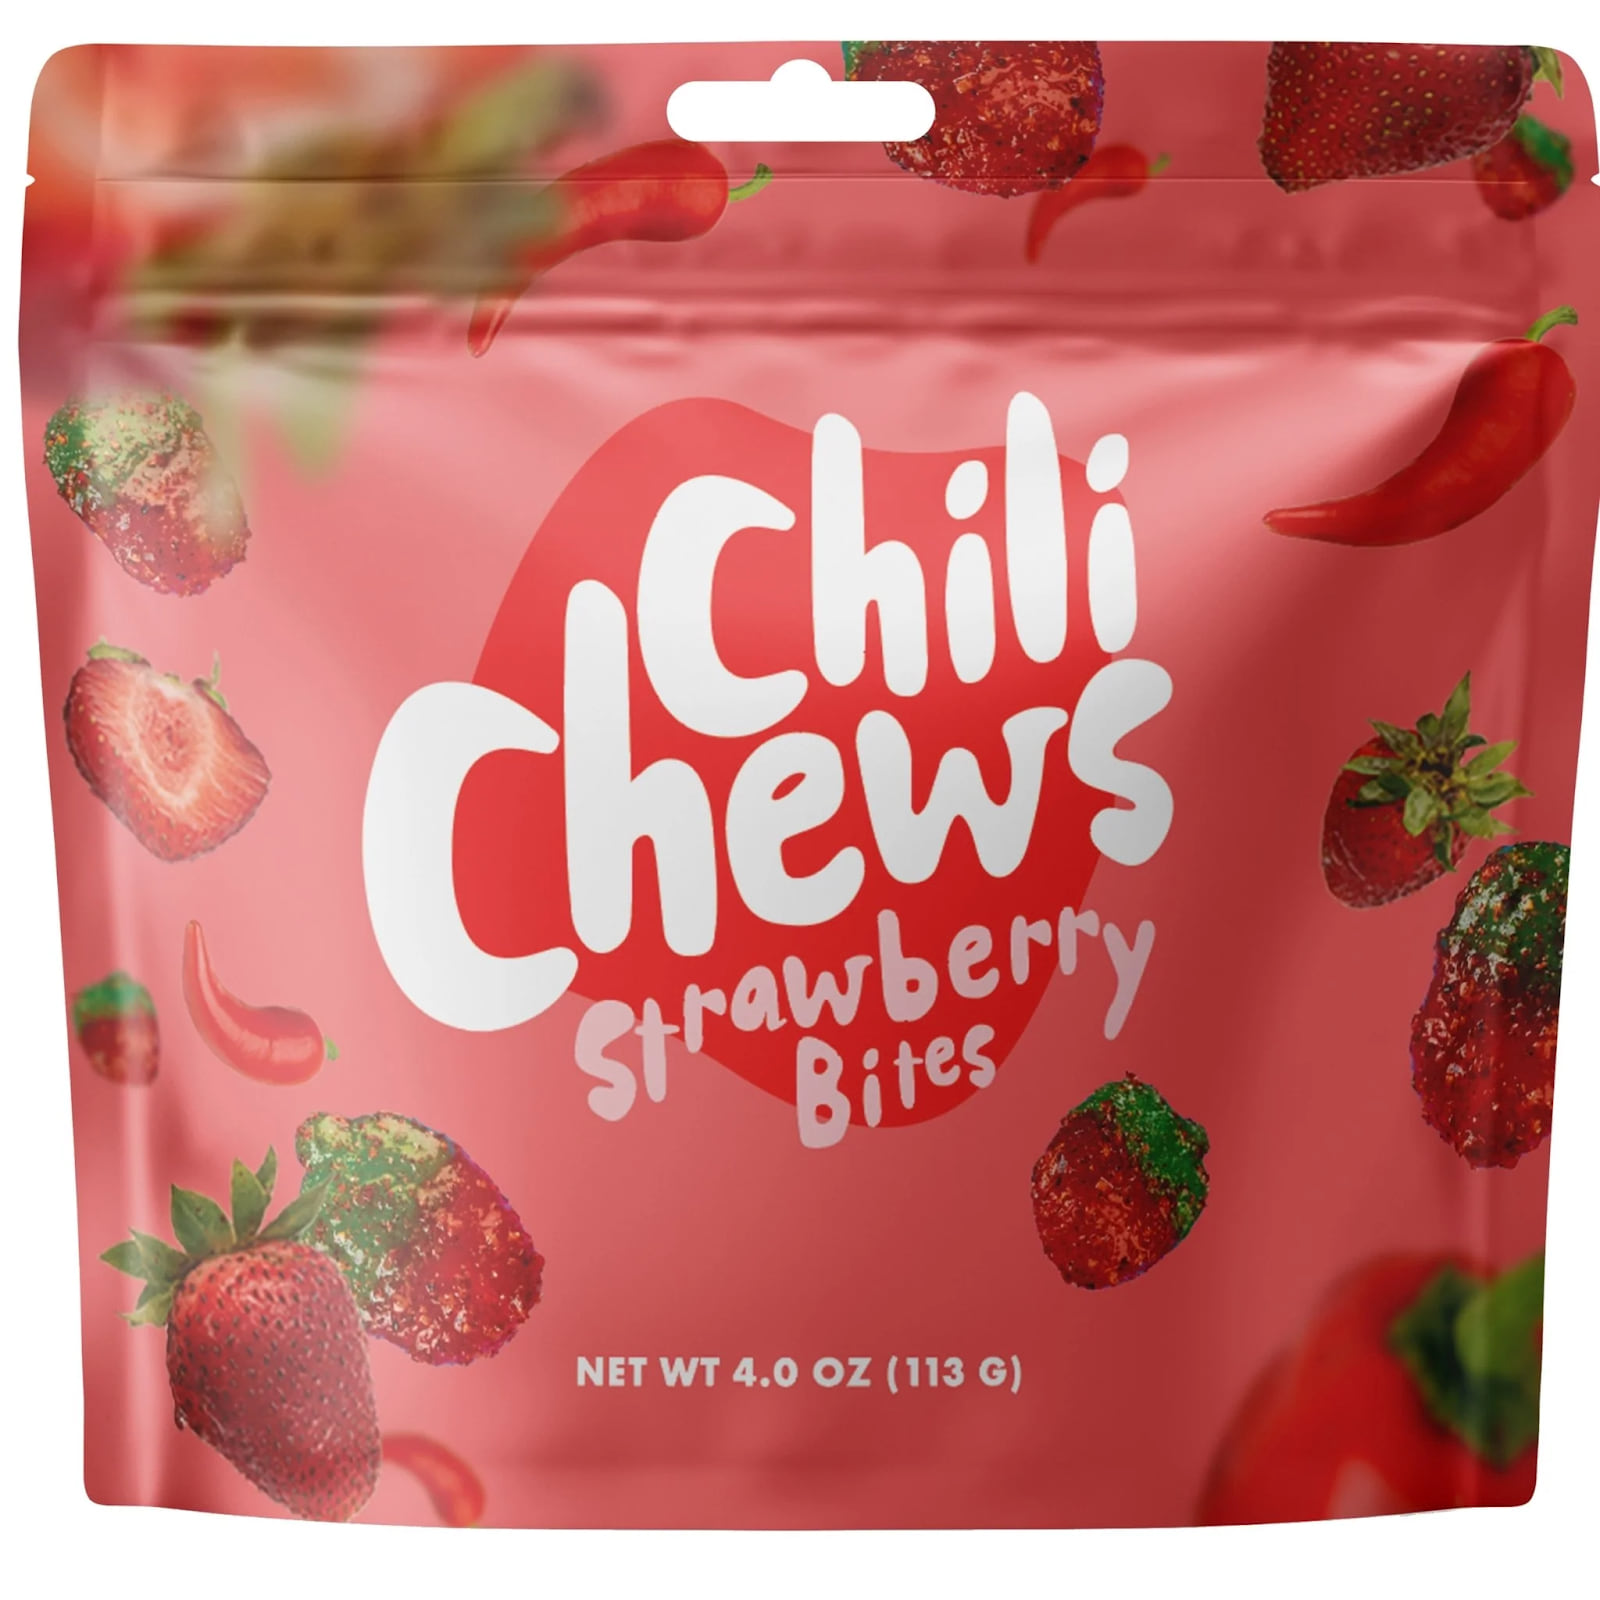 Chili Chews Review 2